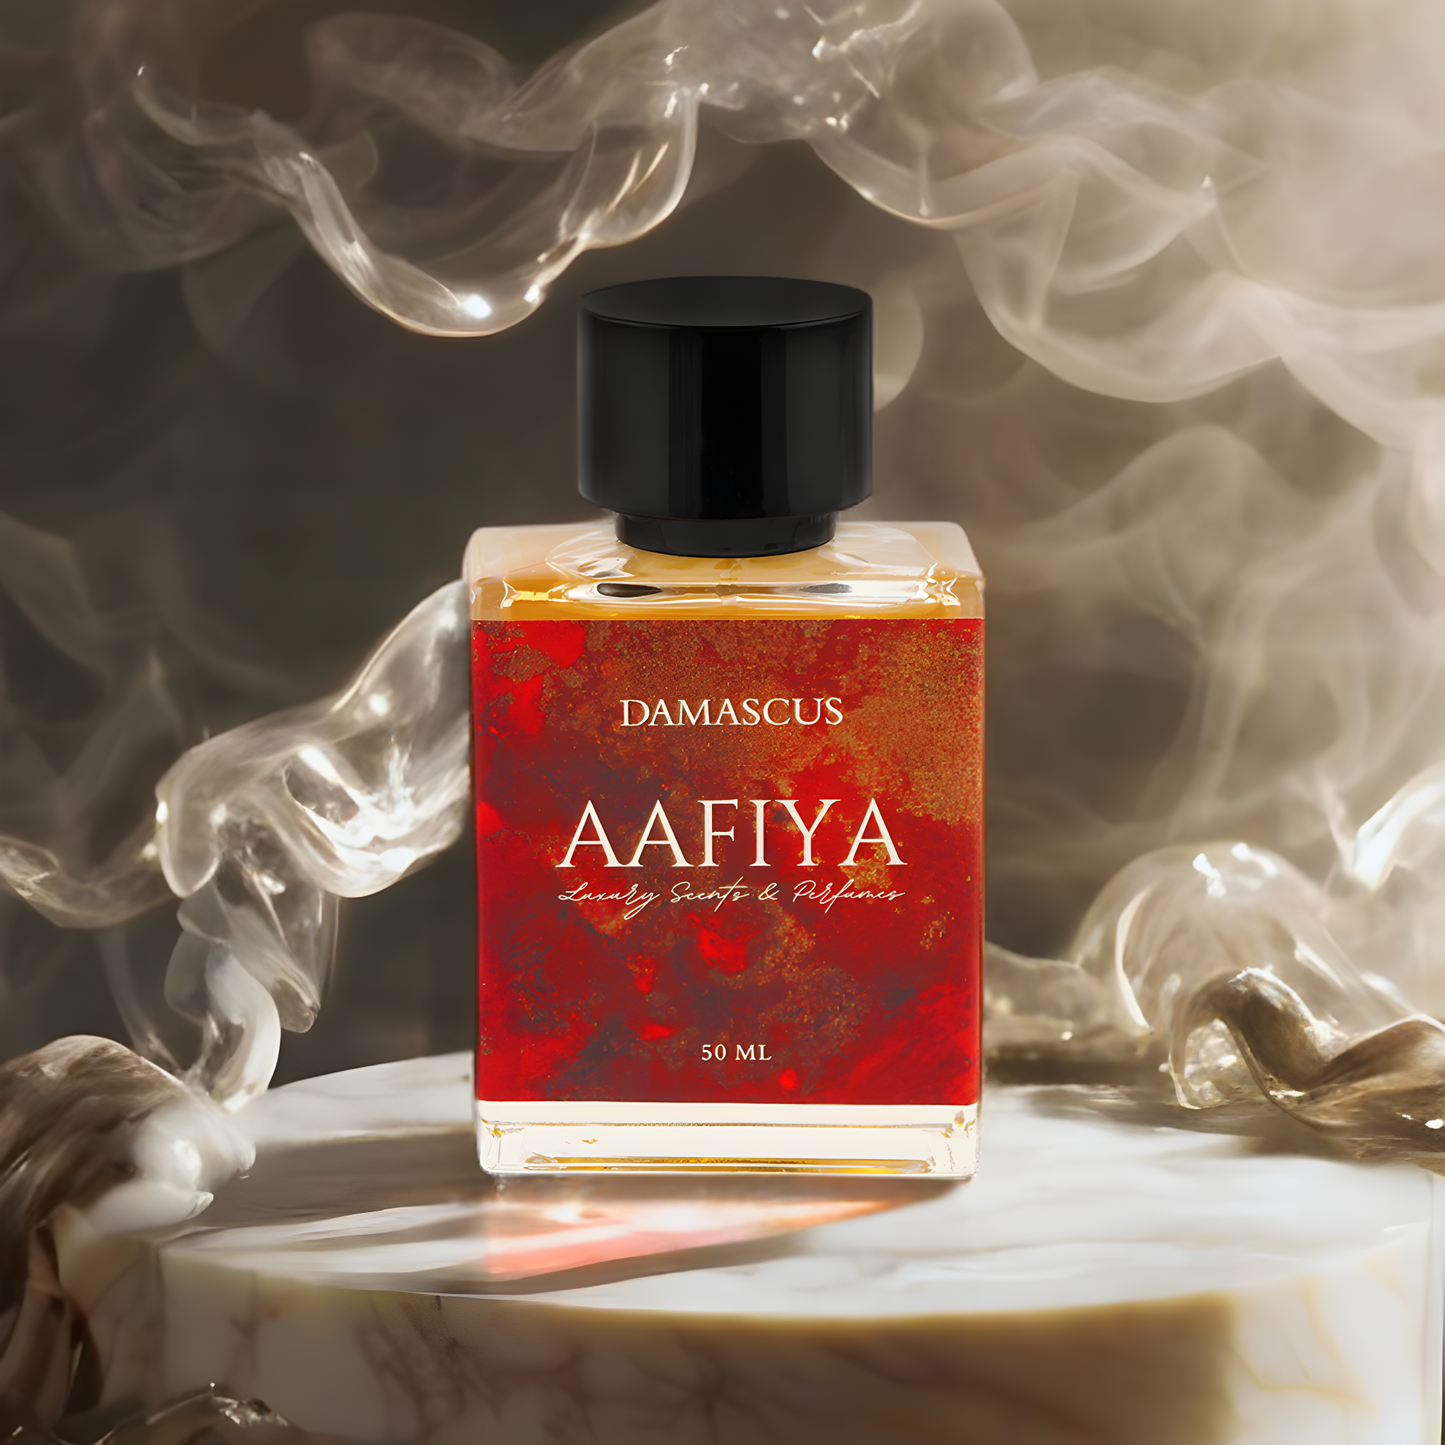 Damascus Aafiya Luxury Scents & Perfumes